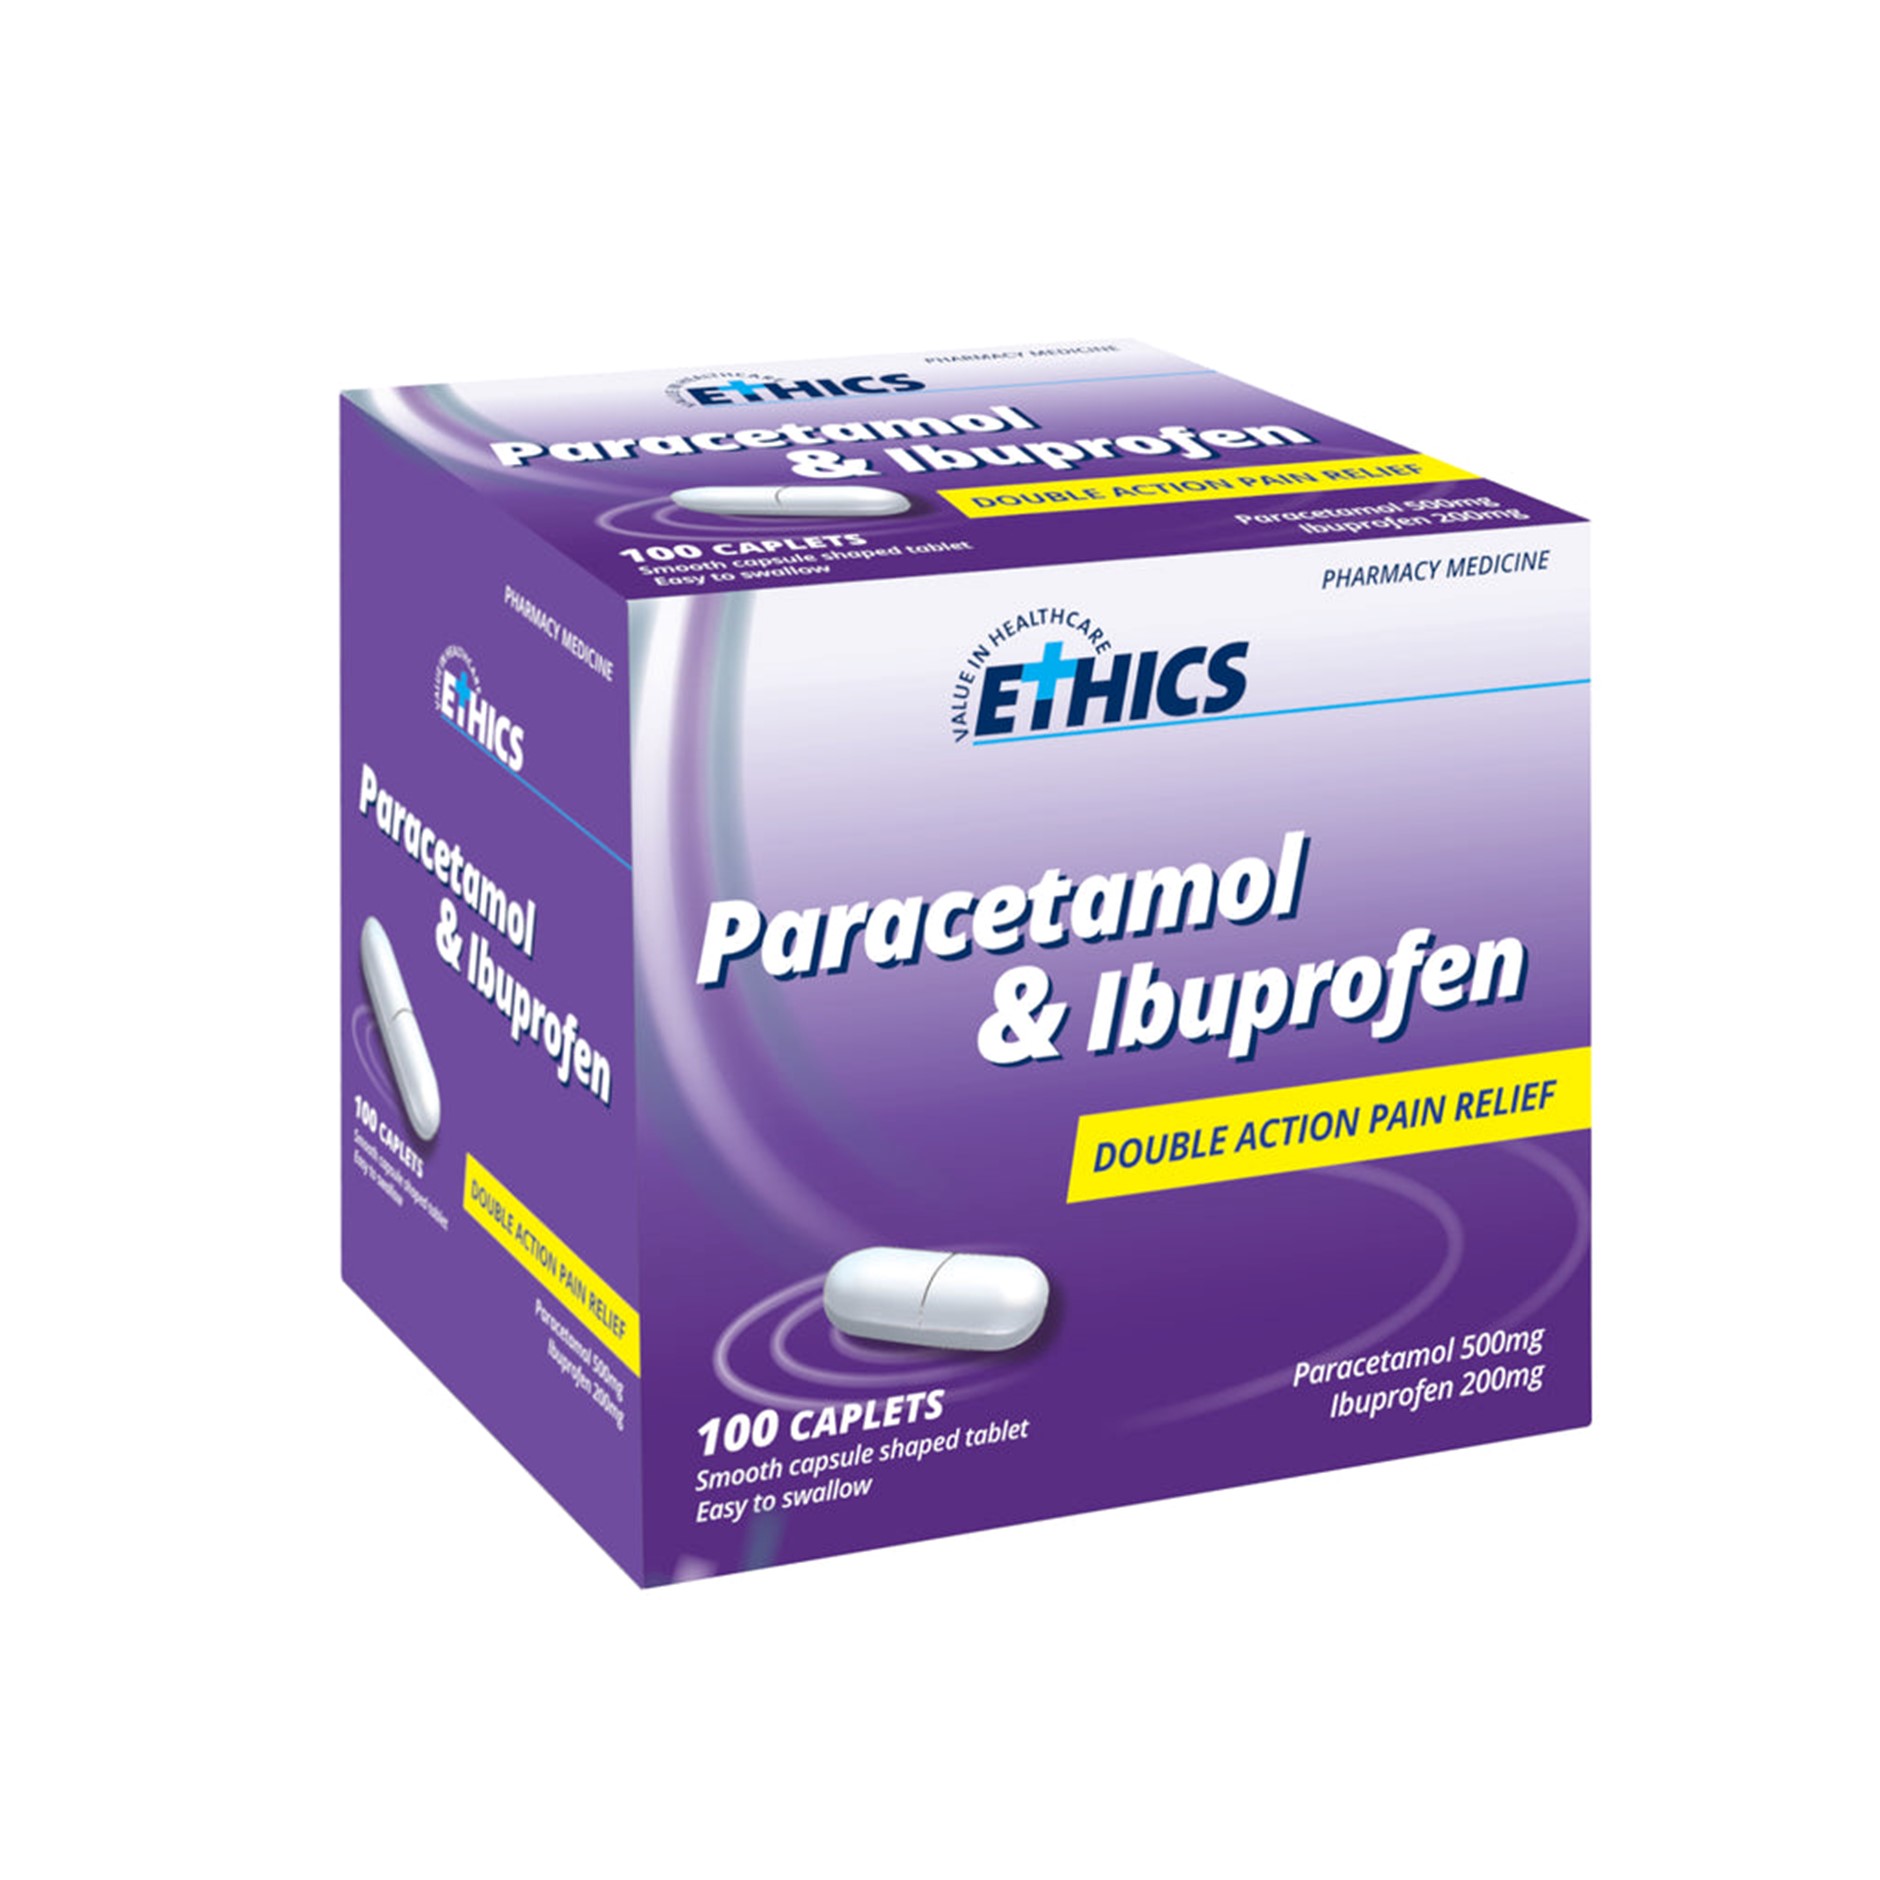 Ethics Paracetamol & Ibuprofen 100s